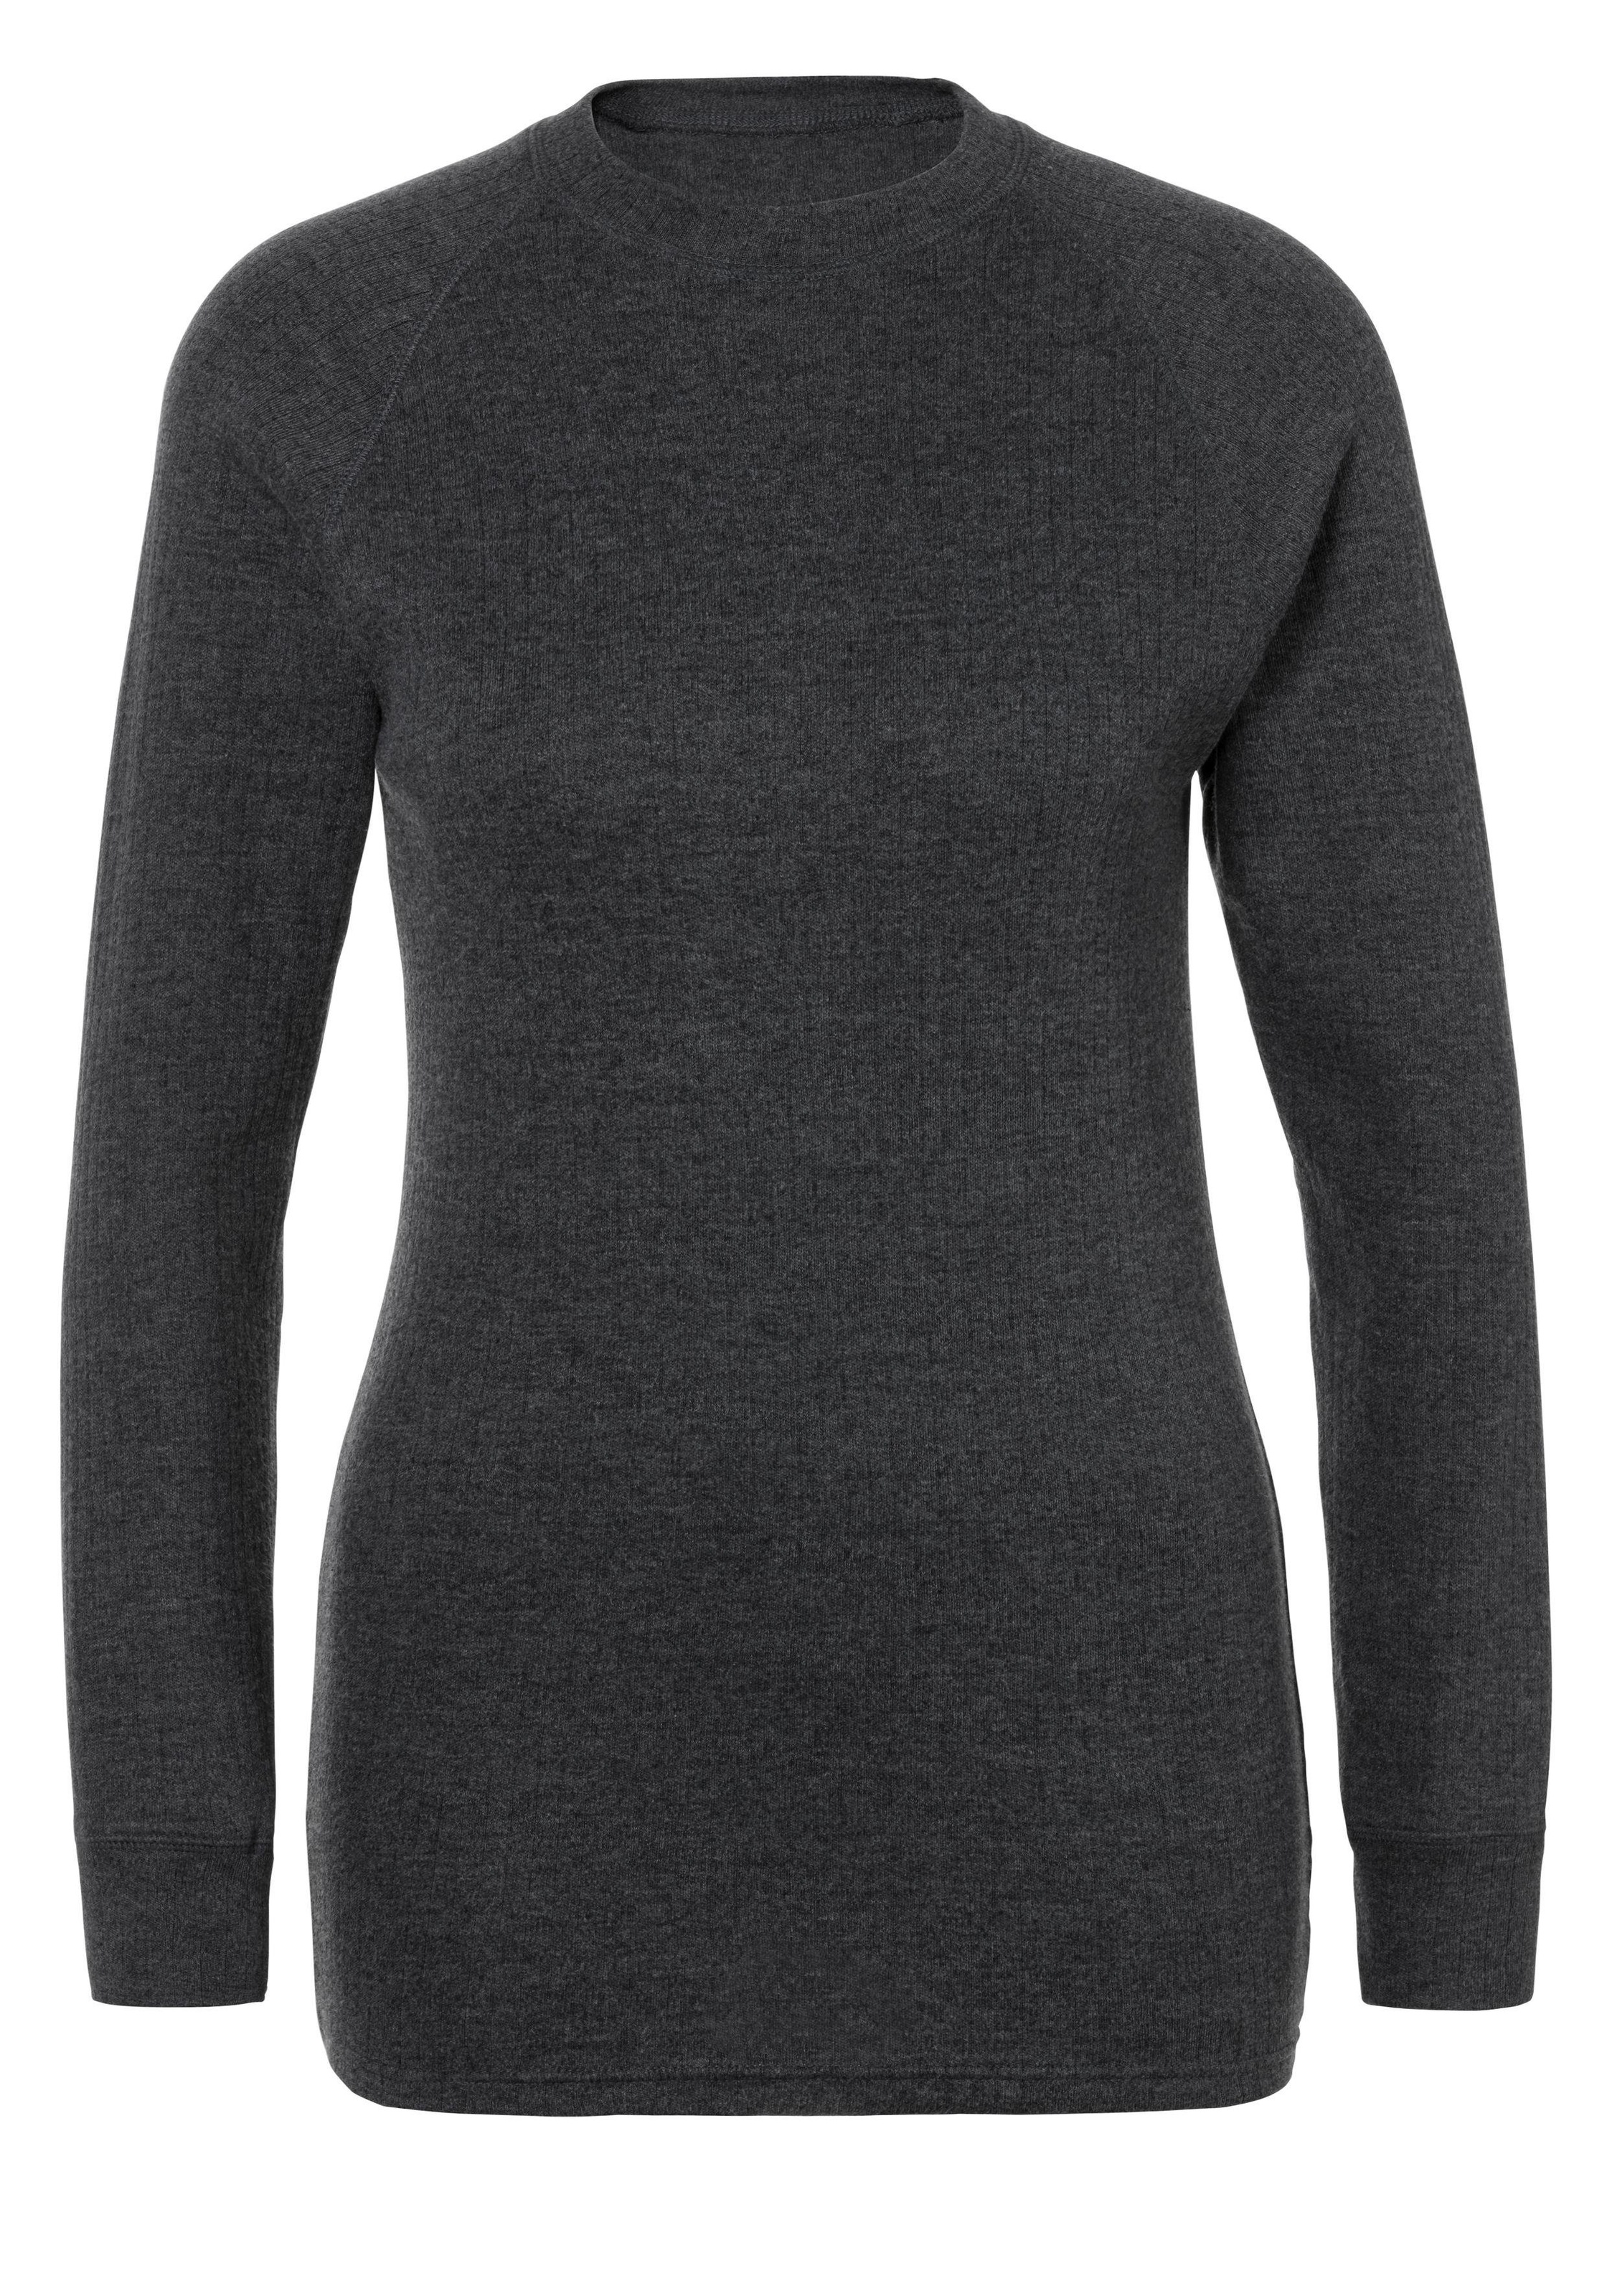 KEEPER Thermounterhemd reguliert HEAT kaufen Damen«, die »HEAT keeper Körpertemperatur bequem